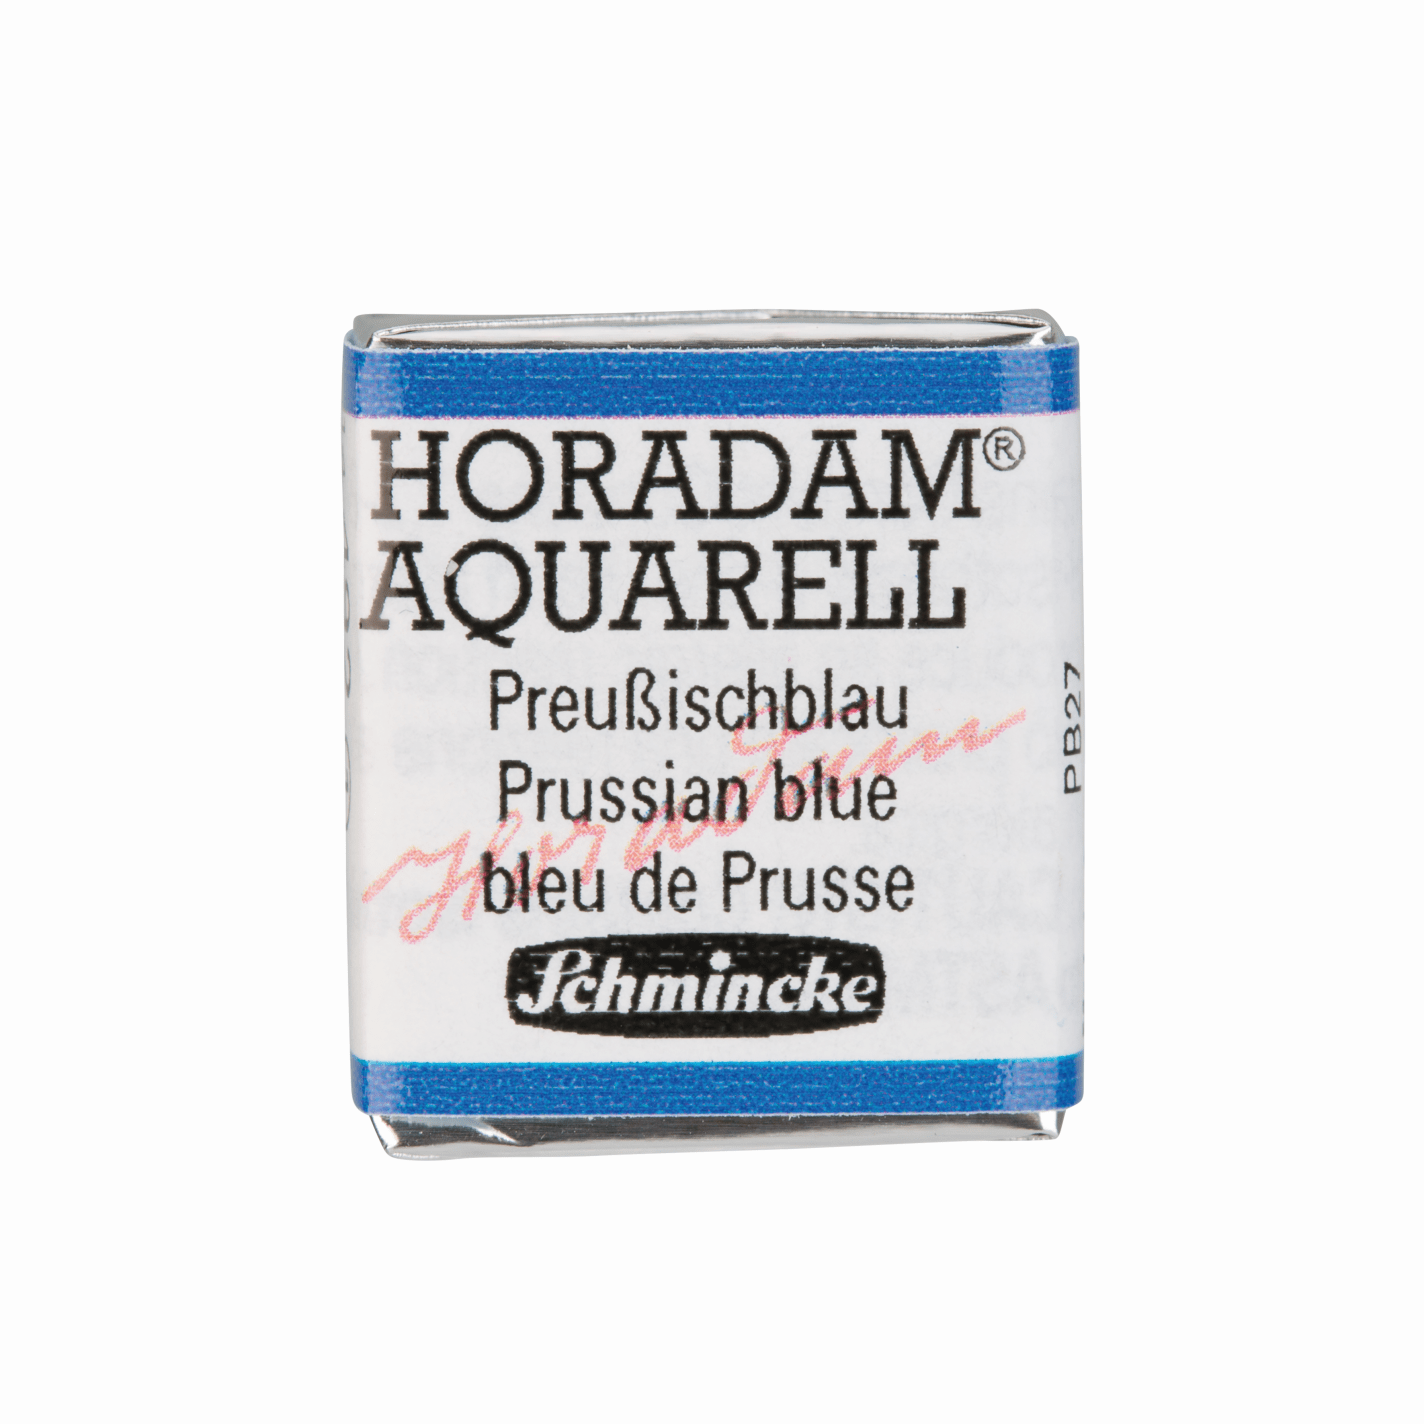 Schmincke Horadam Aquarell pans 1/2 pan Prussian Blue